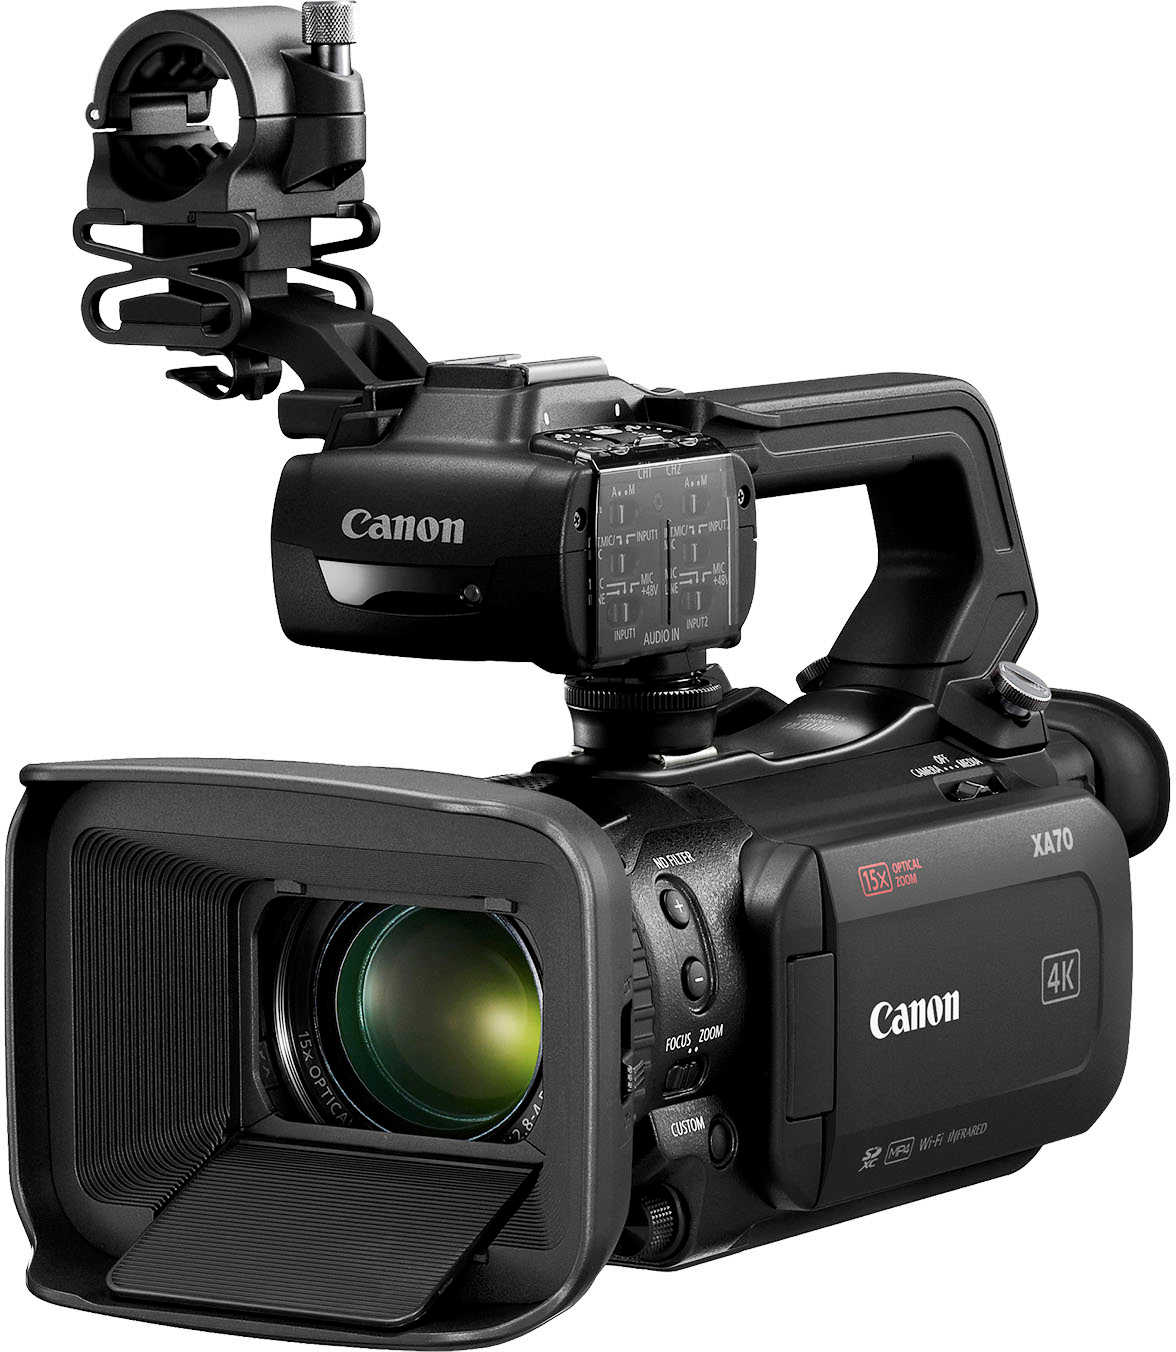 Angle View: Canon - XA70 Professional Camcorder - Black